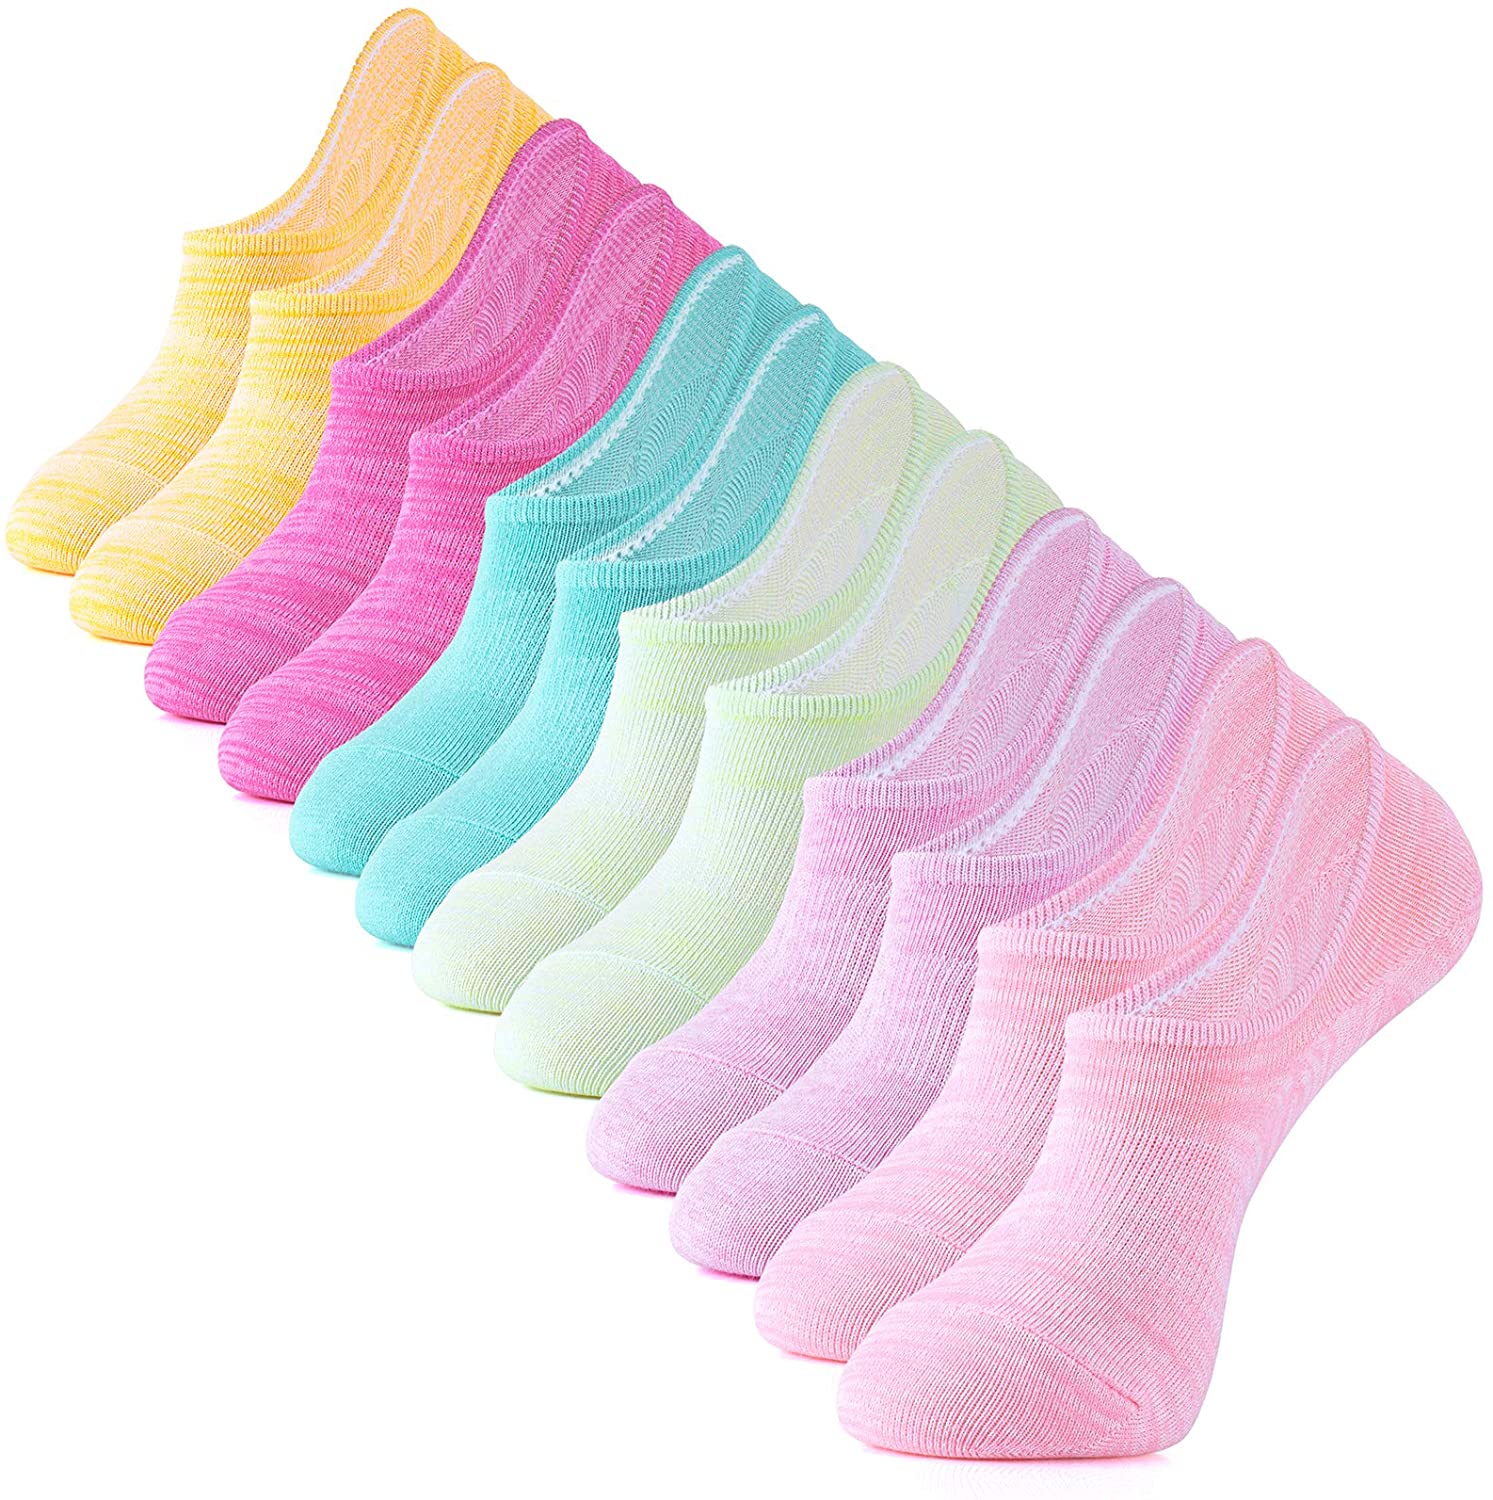 IDEGG Women and Men No Show Socks Low Cut Anti-slid Cotton Athletic Casual Socks 